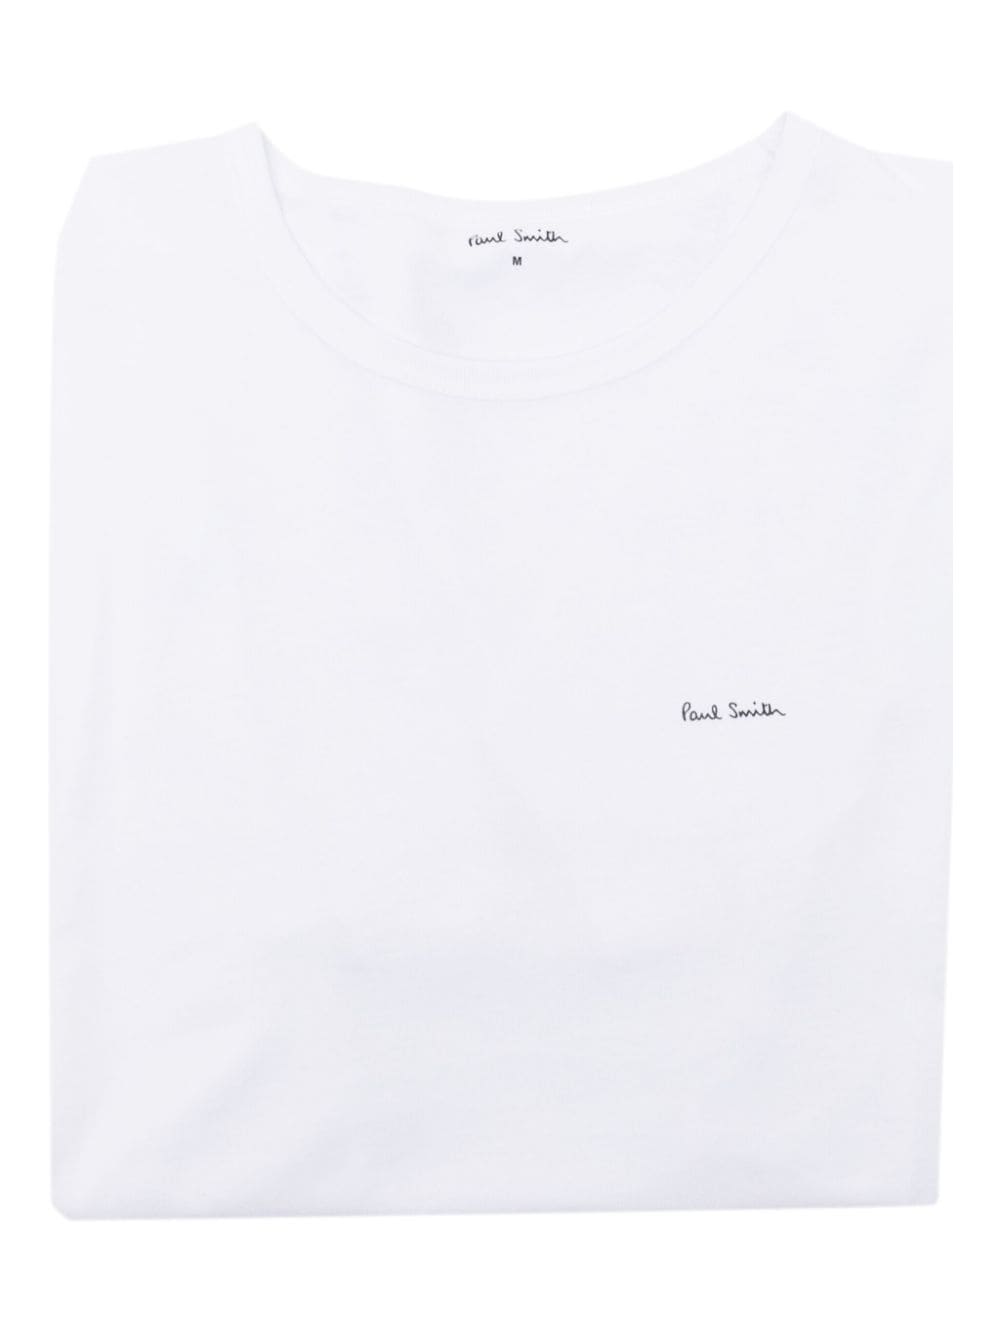 Paul Smith logo-print cotton T-shirts (set of three) - Zwart